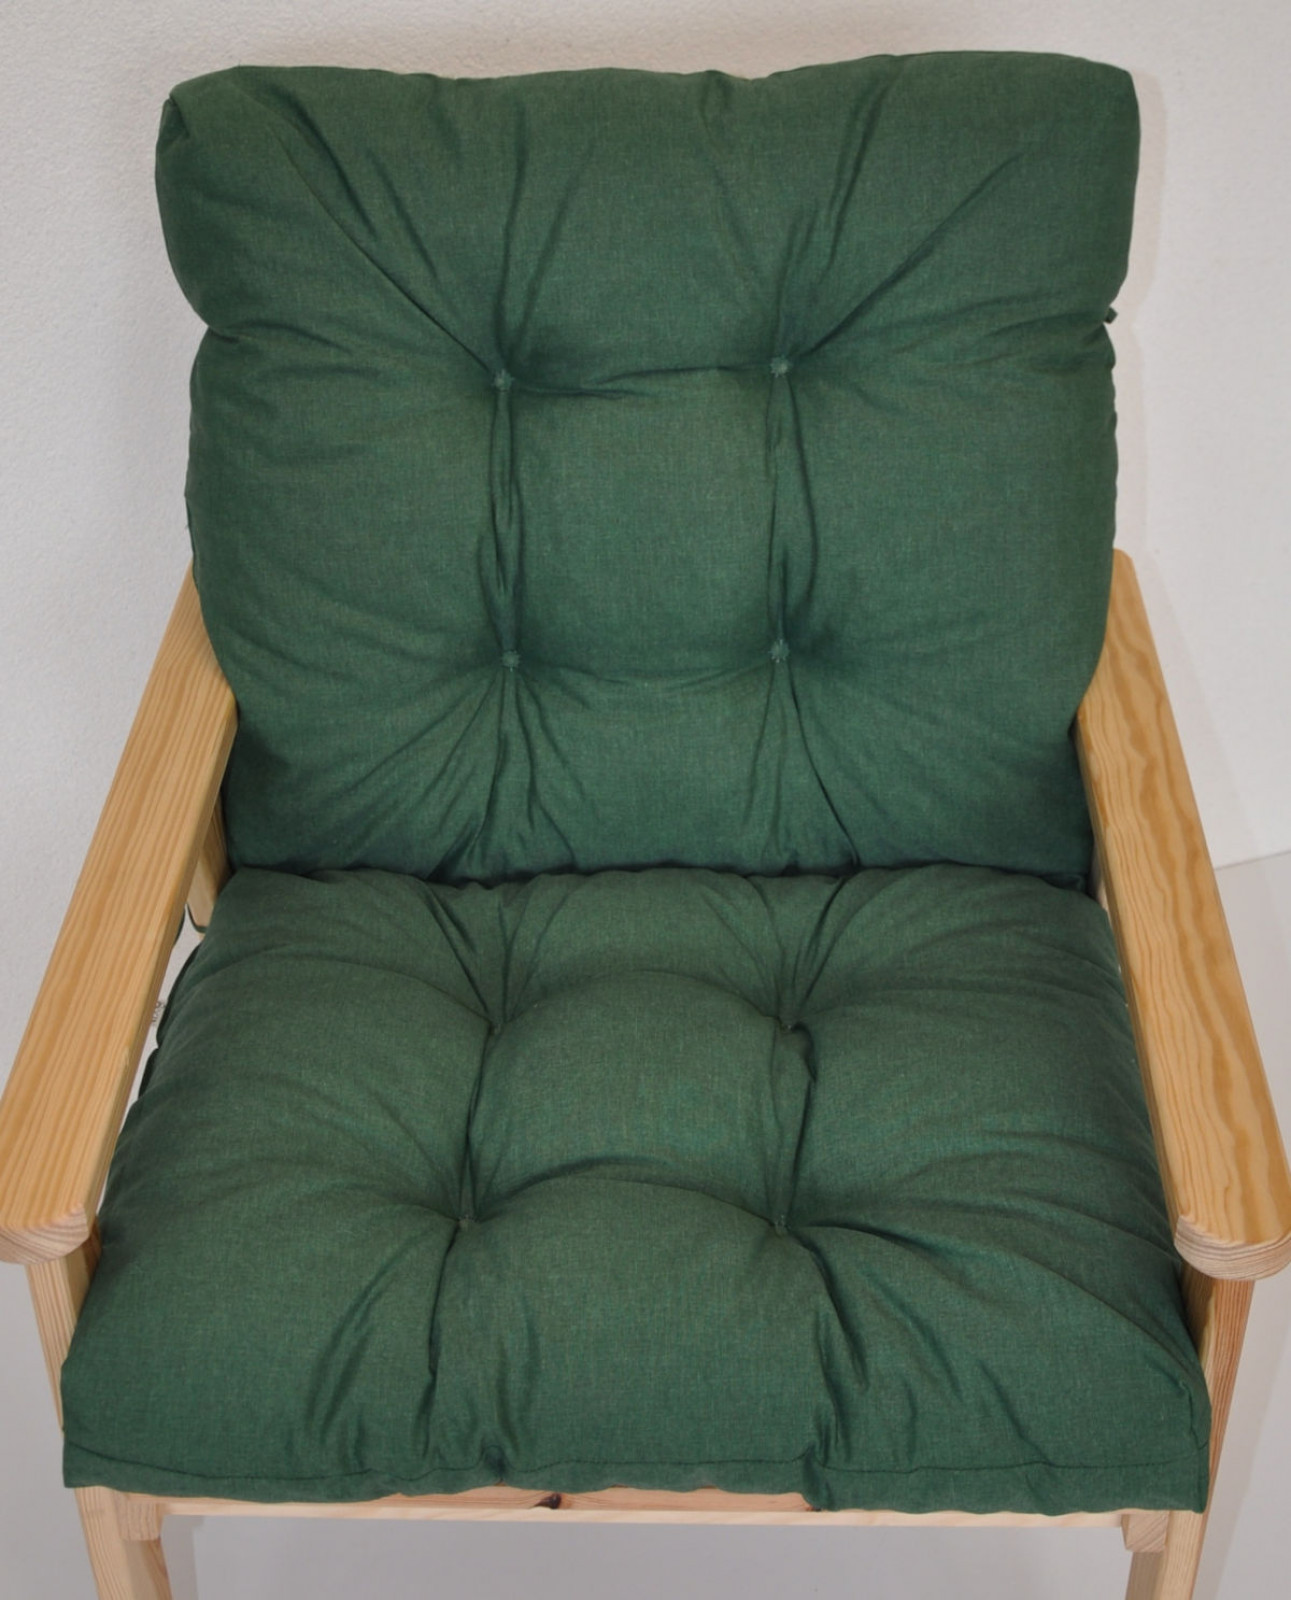 Polster für Gartenstuhl , Schaukelstuhl Nordic , Gr. 100 x 55 cm , Colore verde scuro (dunkelgrün)